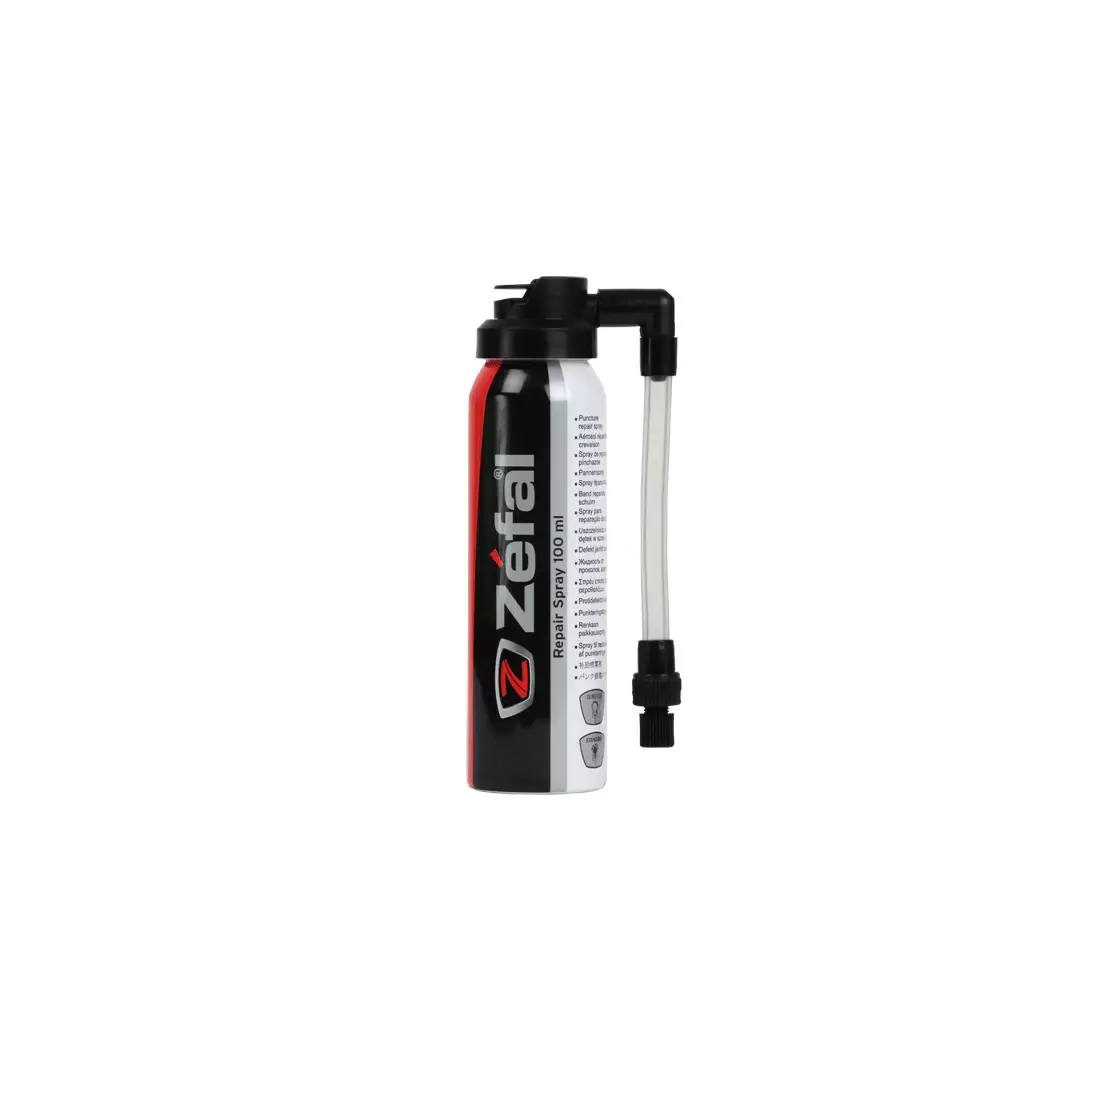 ZEFAL Repair Spray Aerosol sealant for inner tubes and tires 100ml